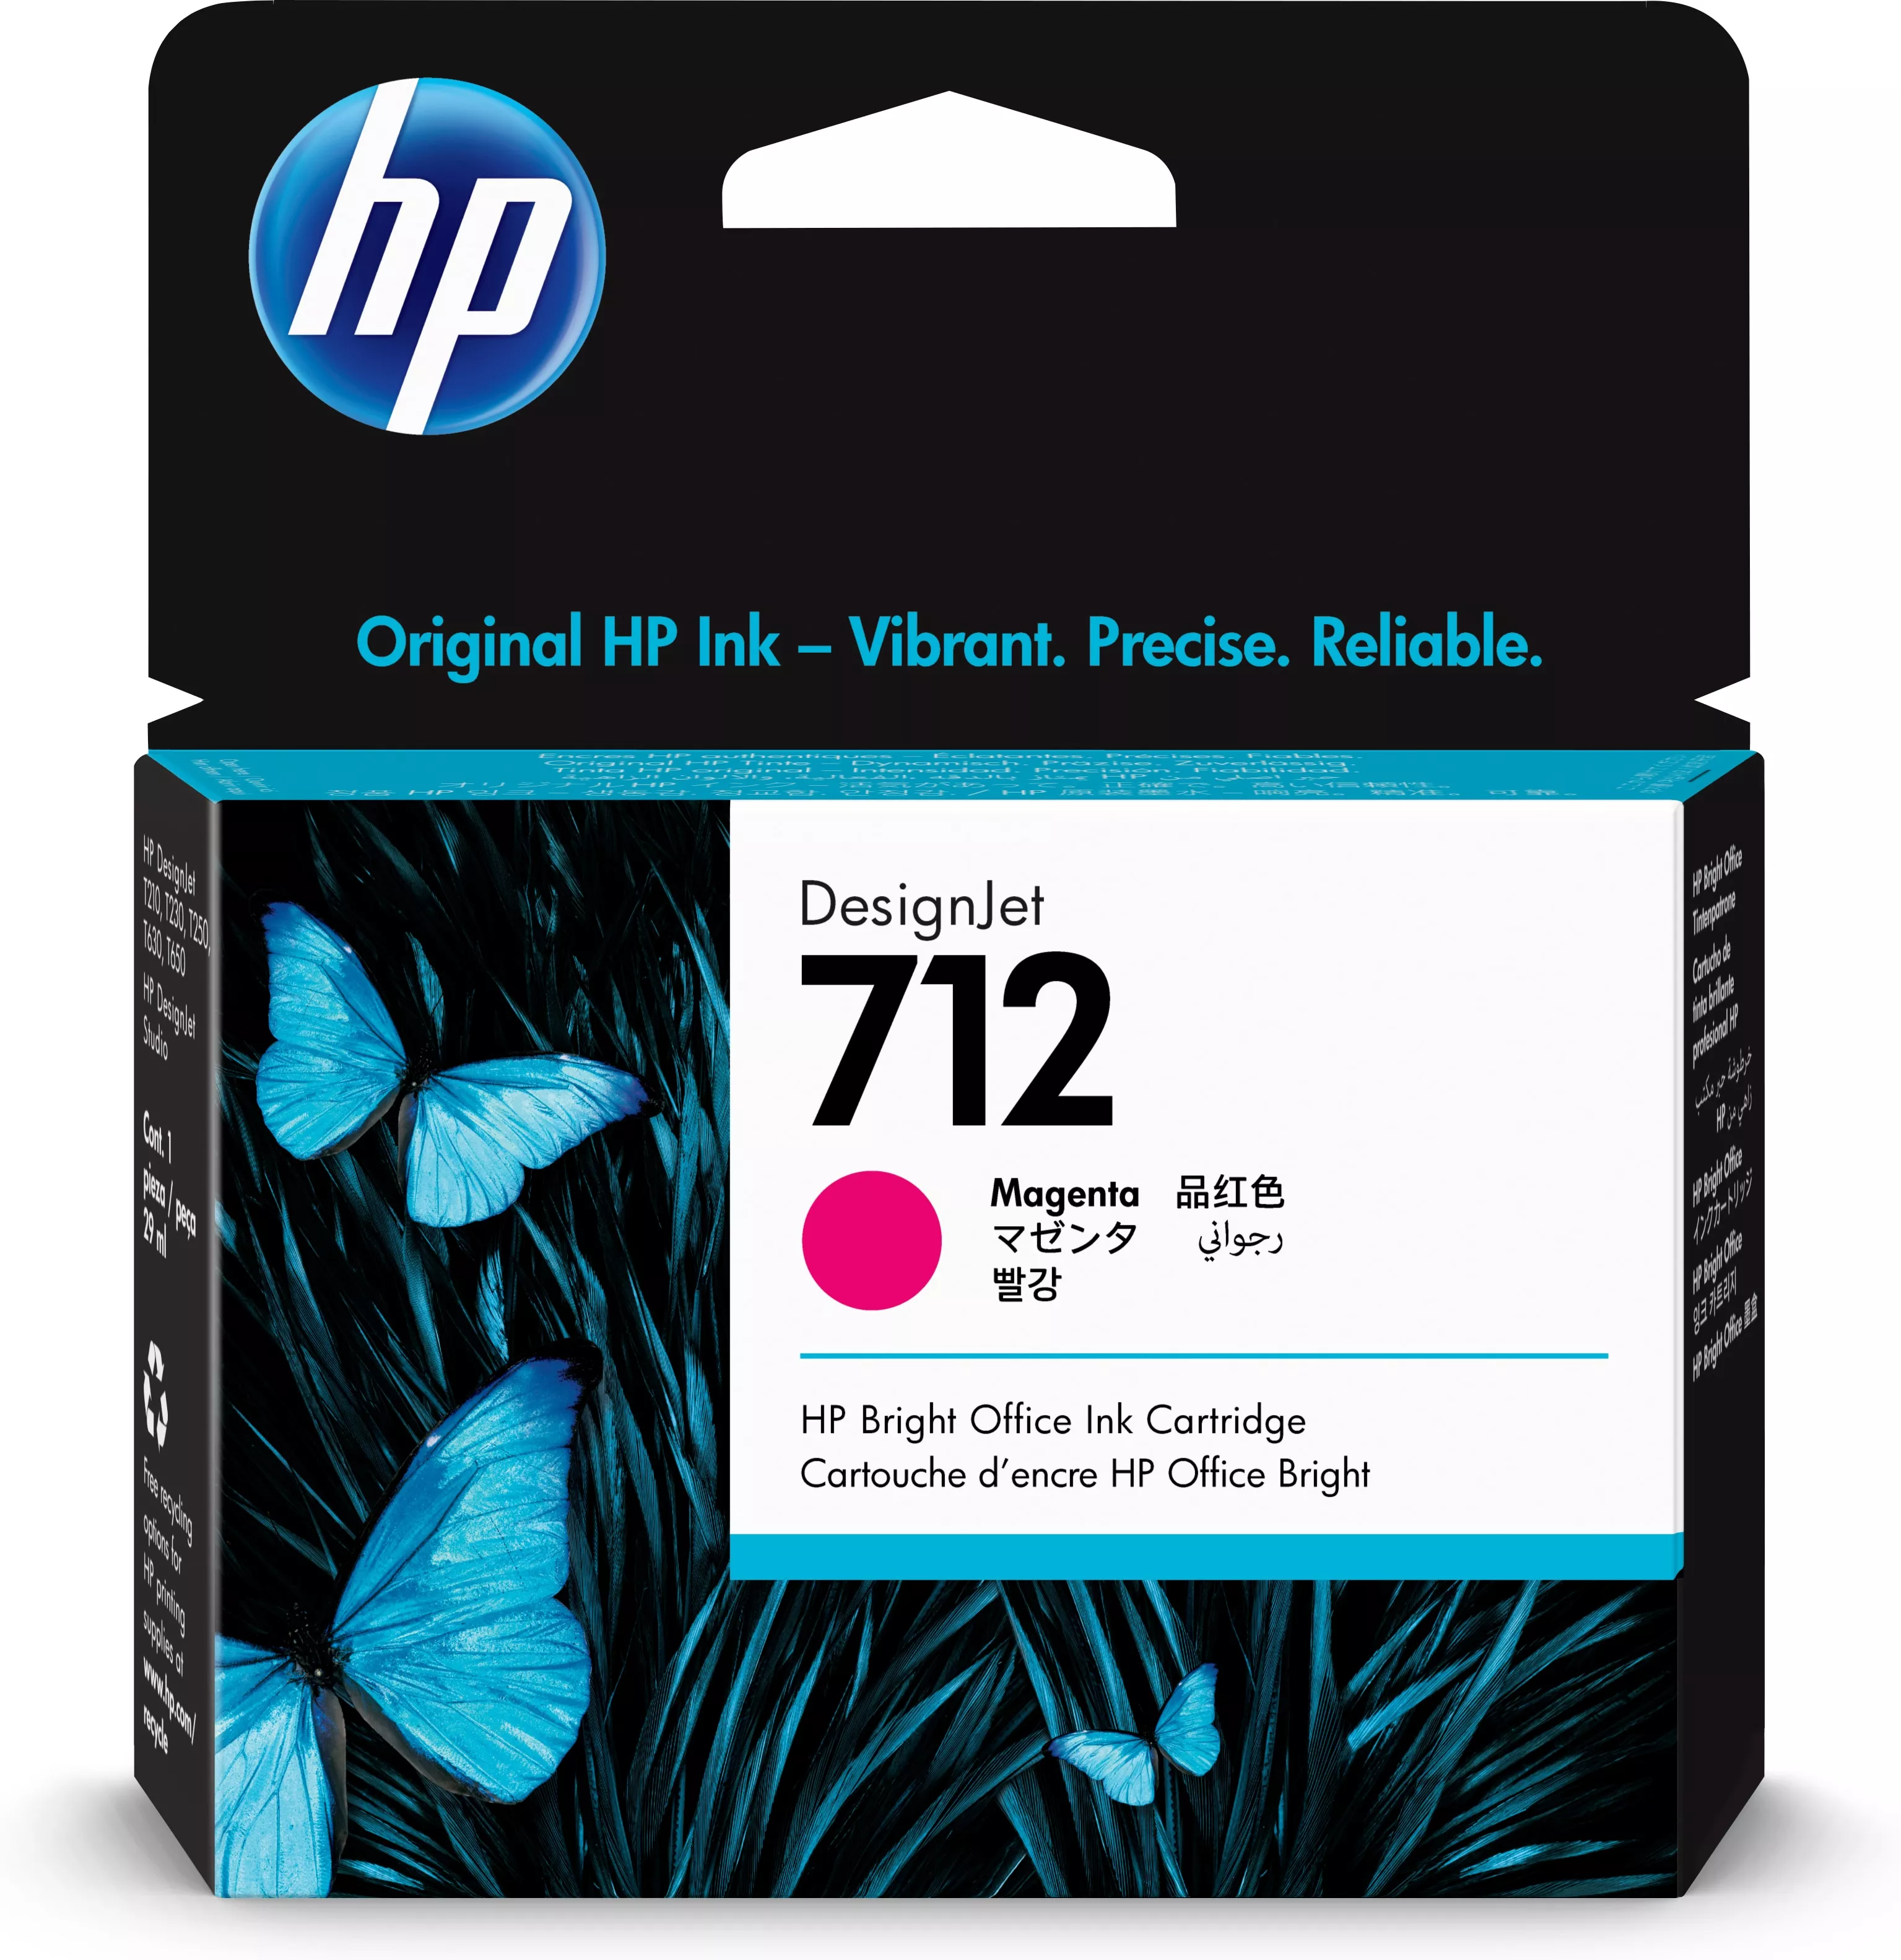 Vente HP 712 29-ml Magenta DesignJet Ink Cartridge au meilleur prix